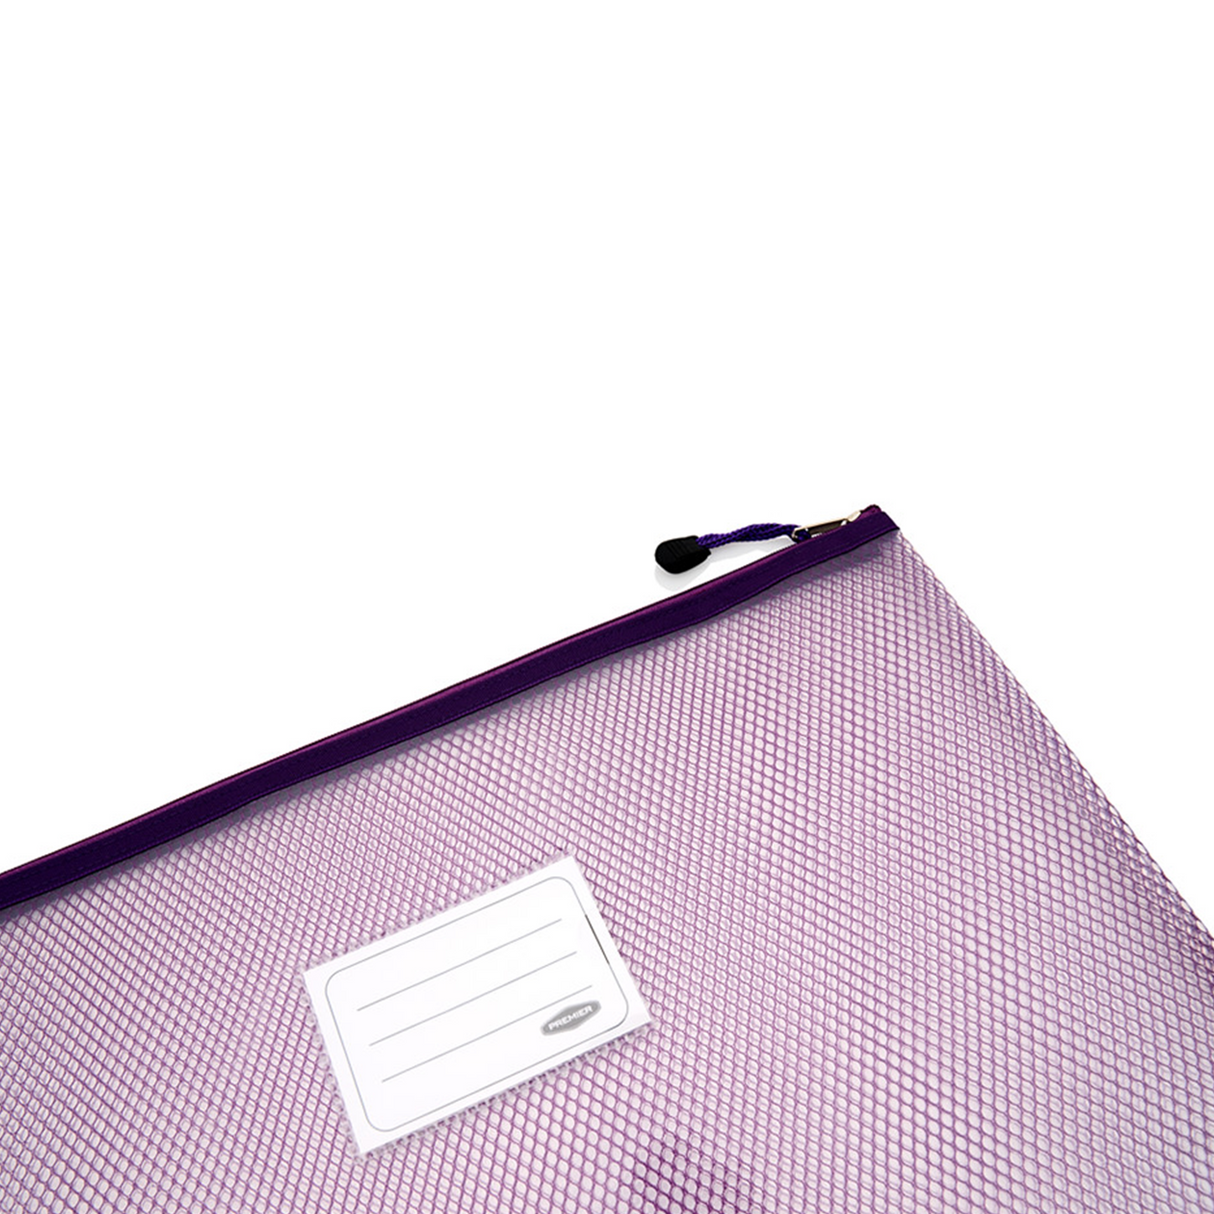 Premto B4+ Ultramesh Expanding Wallet with Zip - Grape Juice Purple | Stationery Shop UK